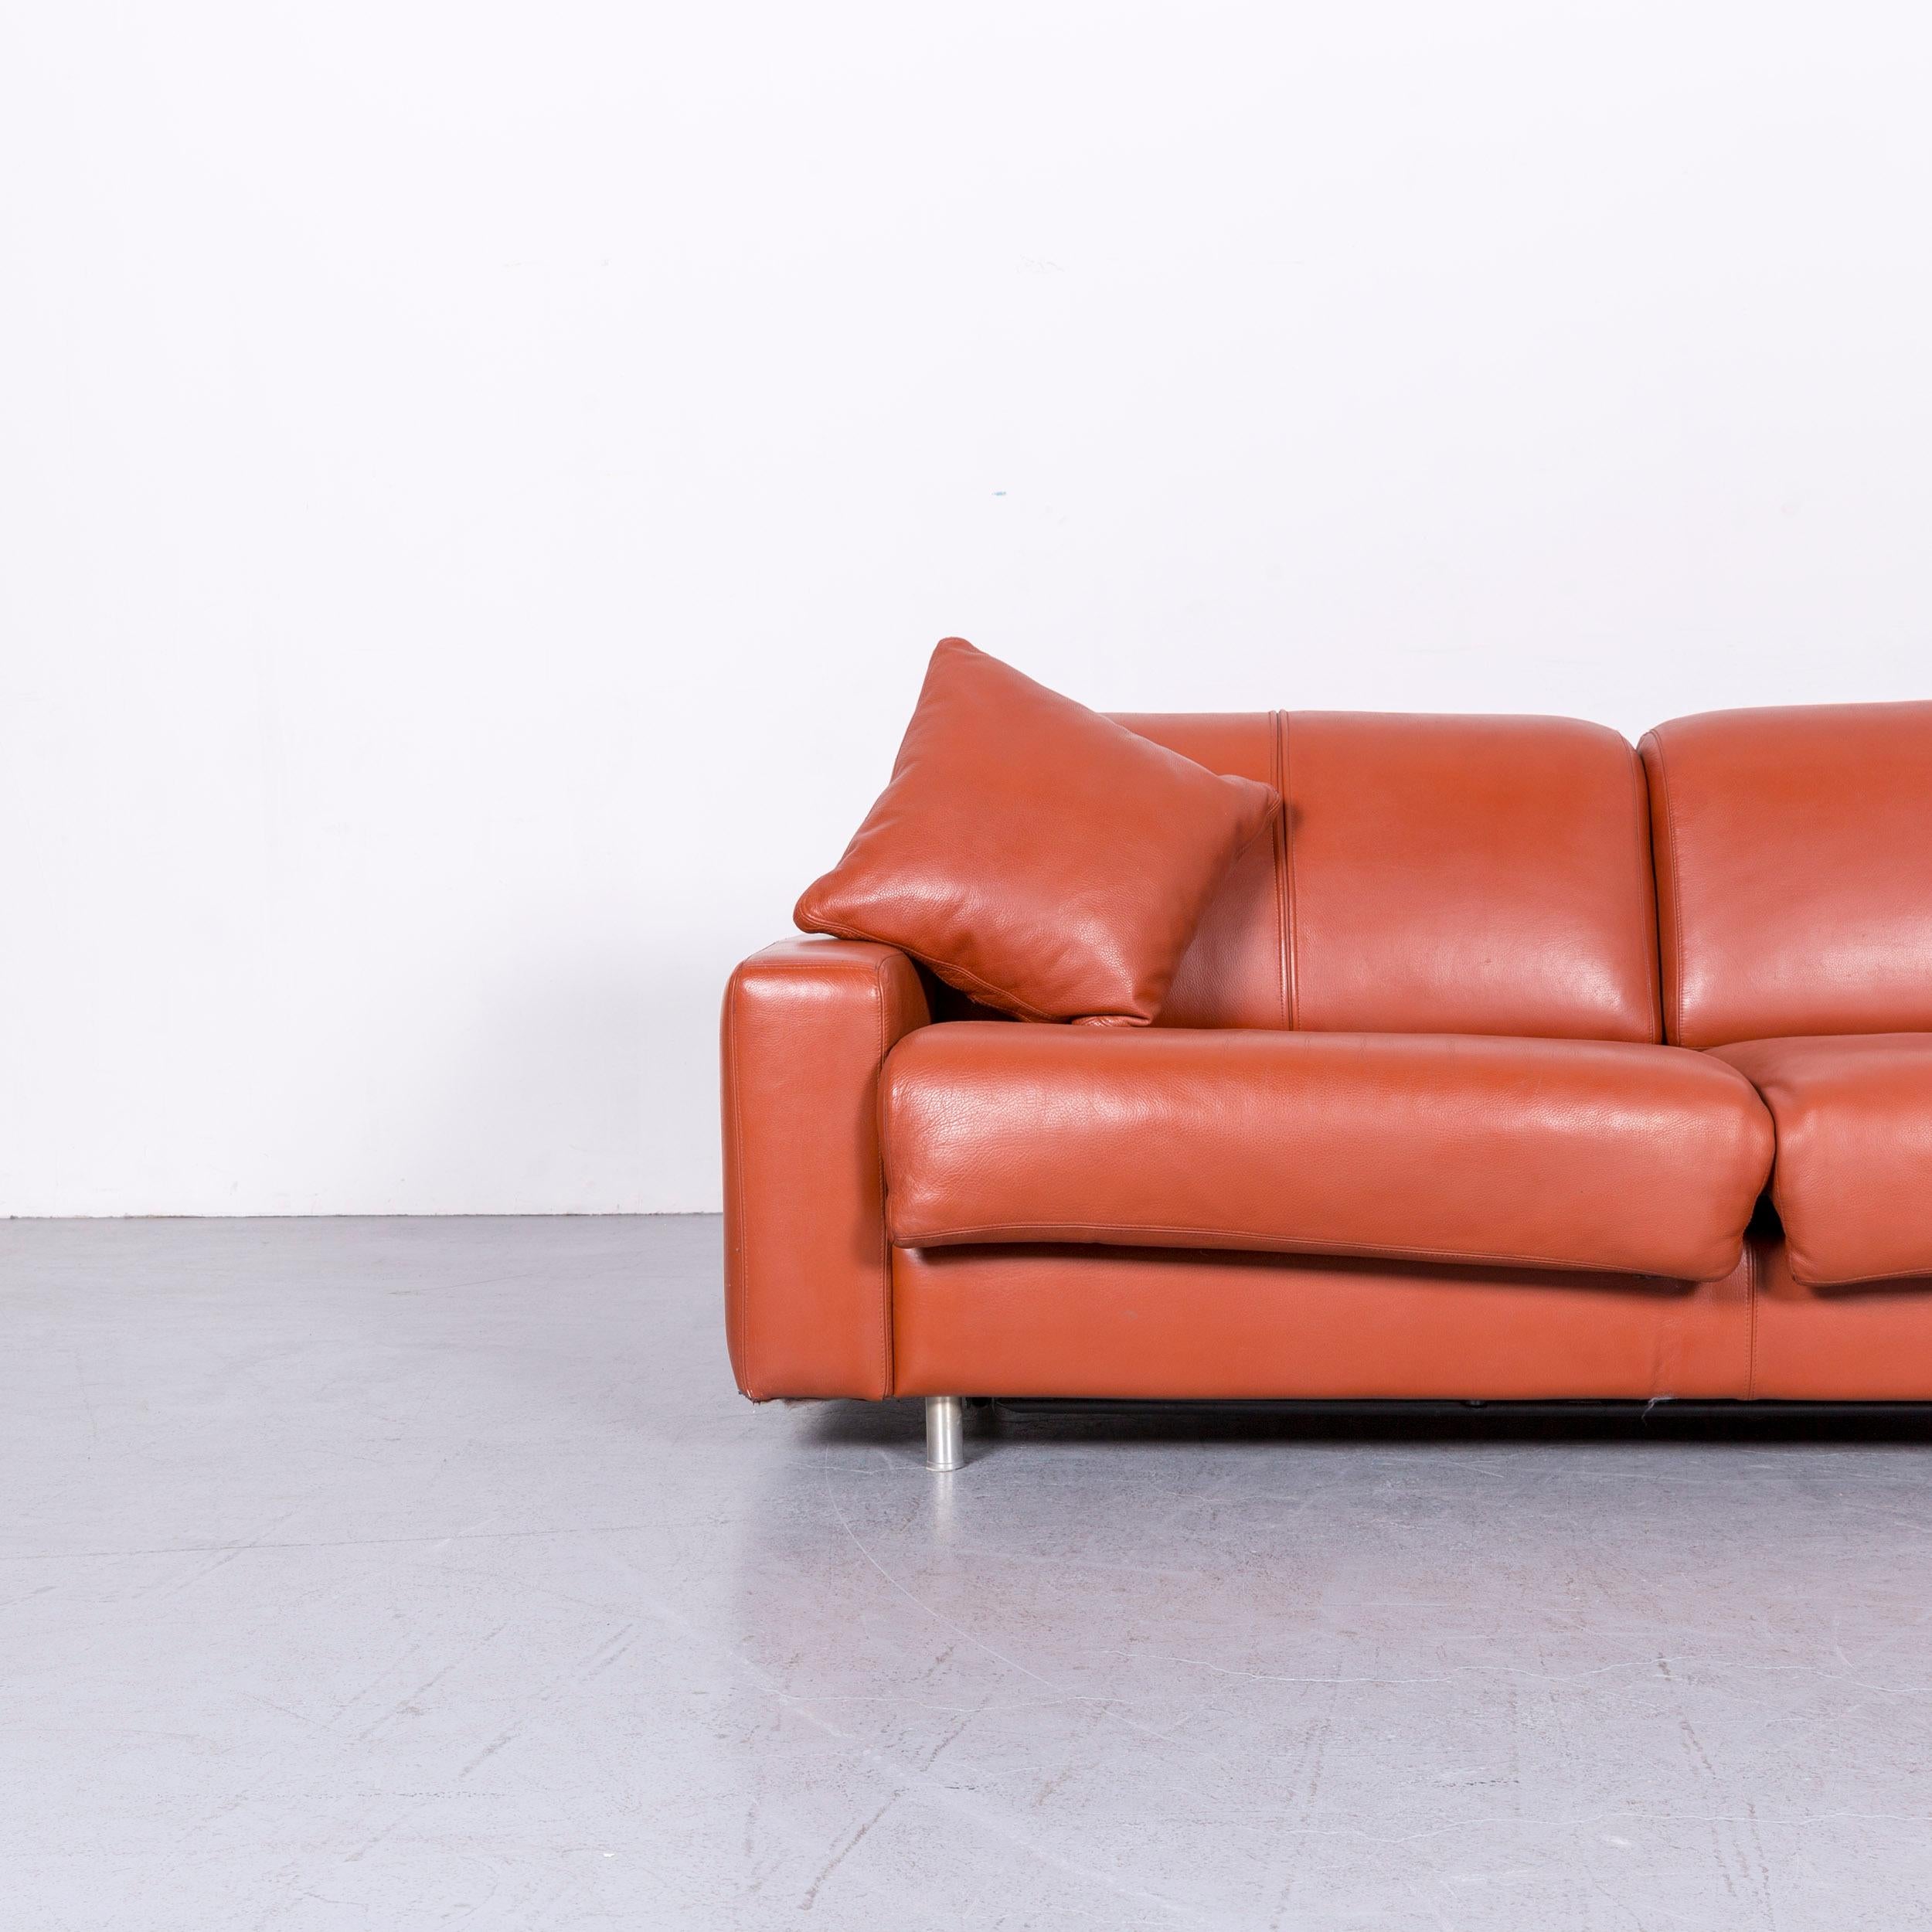 German Cramer Leather Bed Sofa Orange Three-Seat Couch